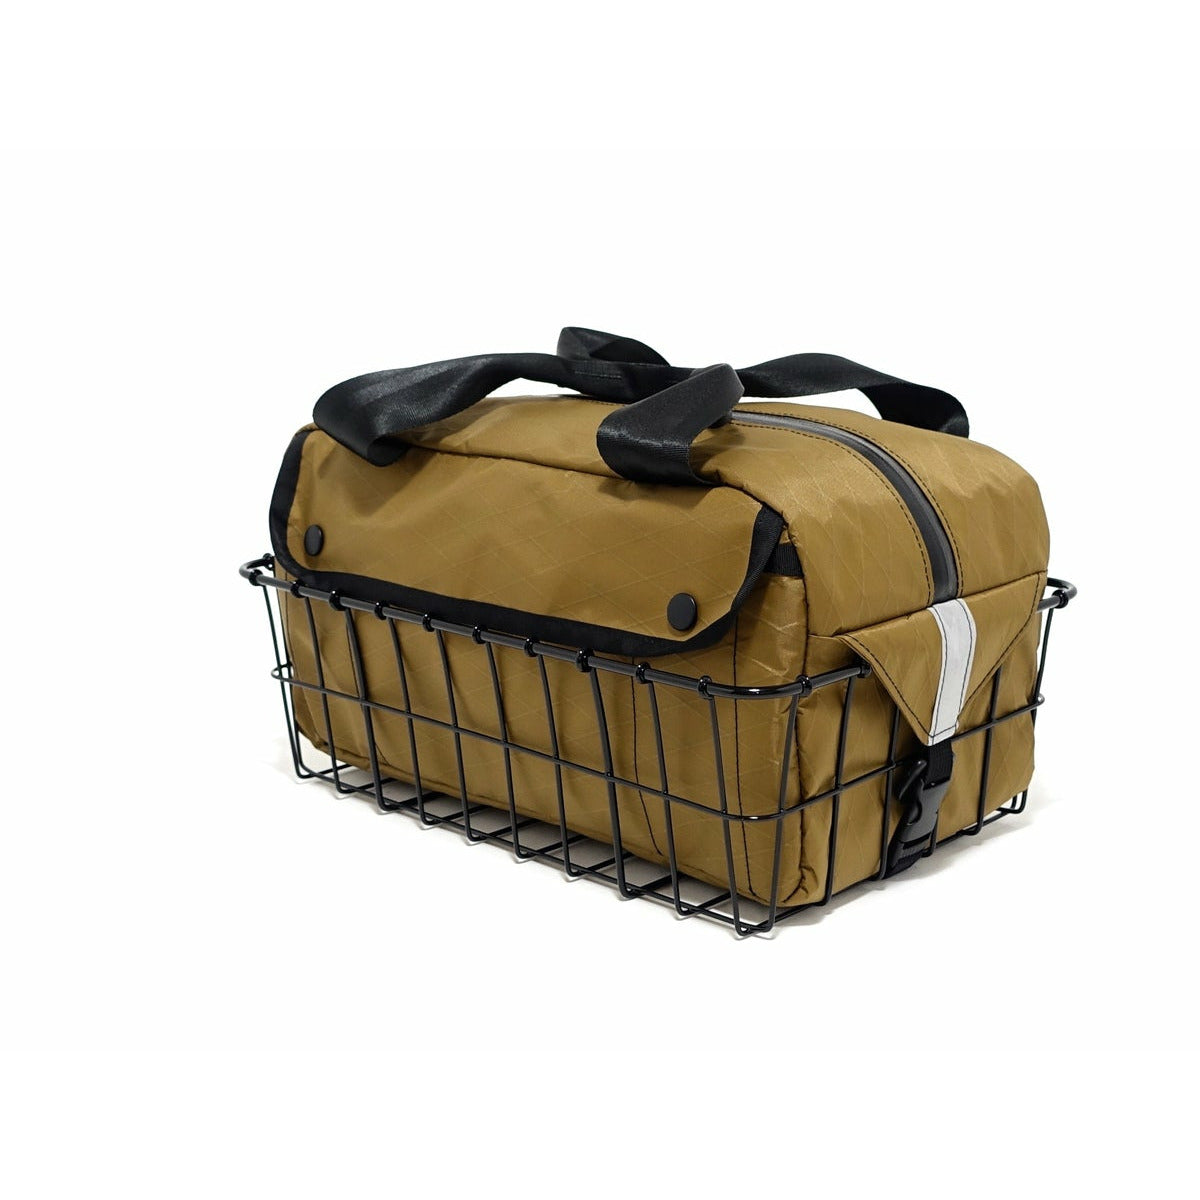 Swift Industries Mother Loaf Basket Bag | Jambi Jambi